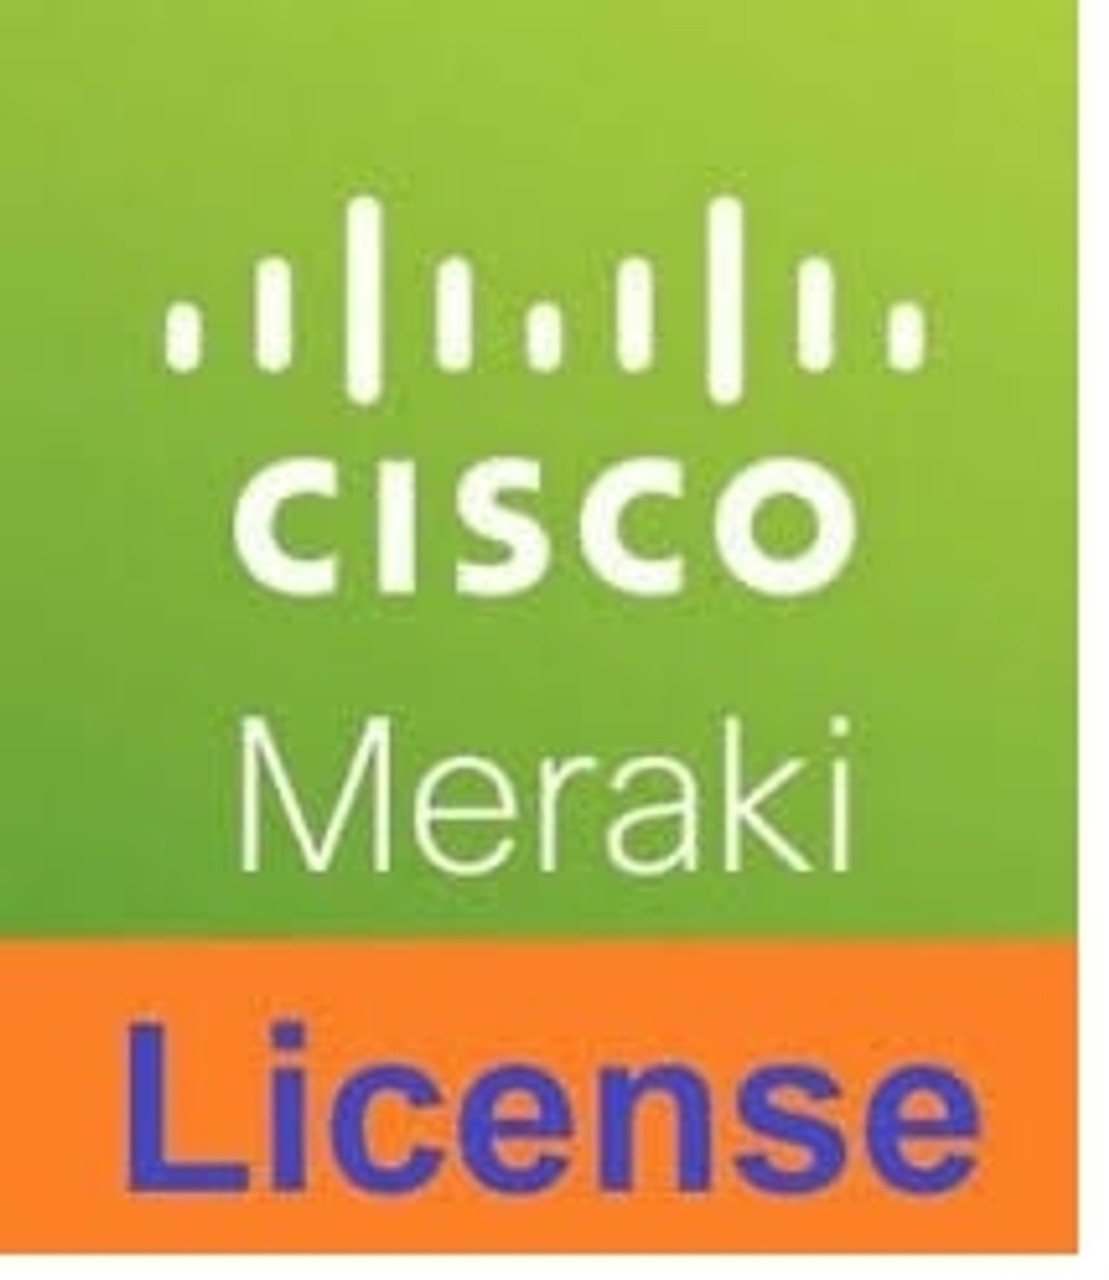 EOS Meraki MS320-48FP Enterprise License and Support, 3 Year